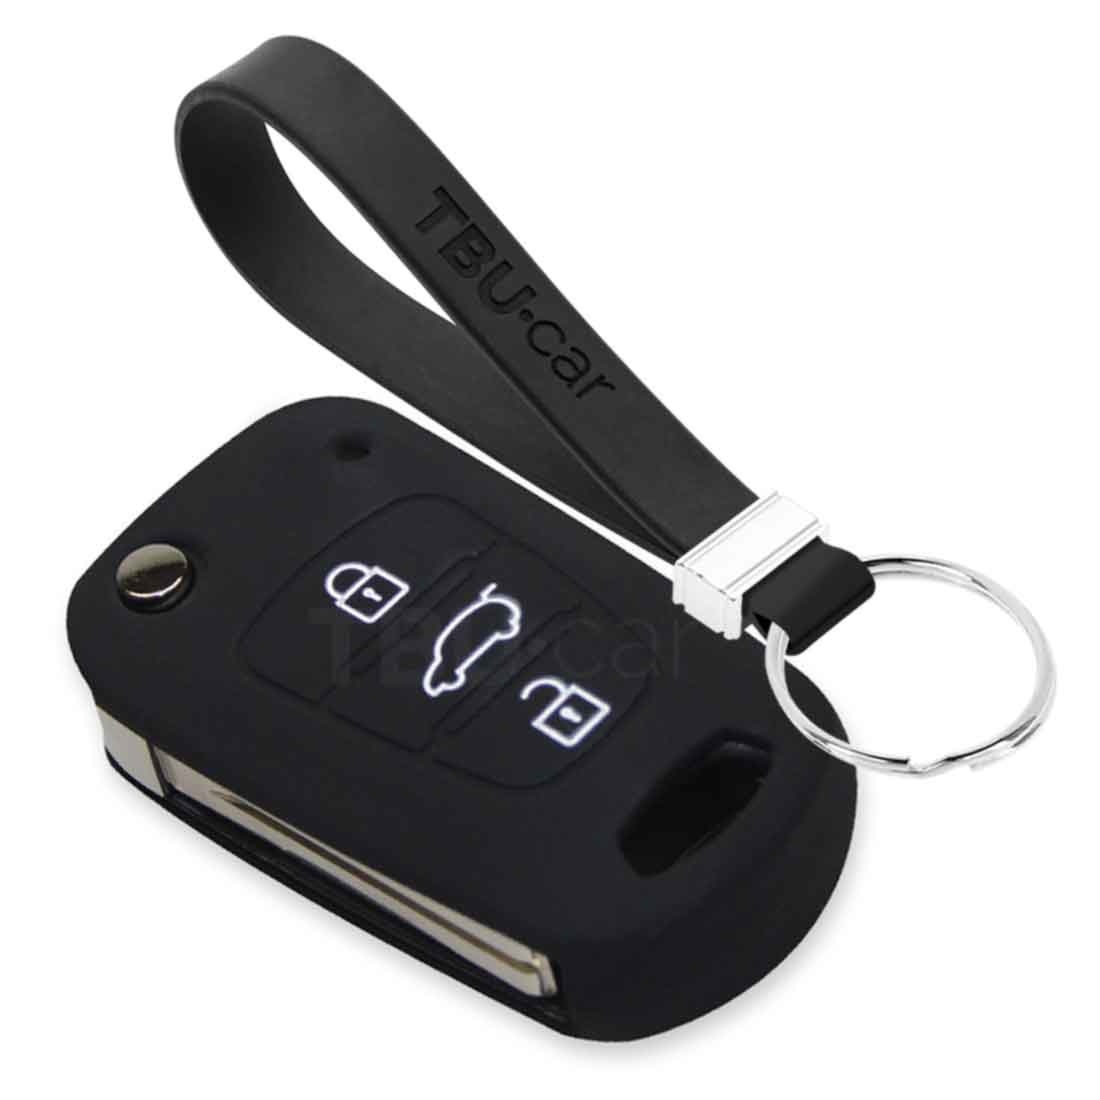 TBU car TBU car Sleutel cover compatibel met Kia - Silicone sleutelhoesje - beschermhoesje autosleutel - Zwart